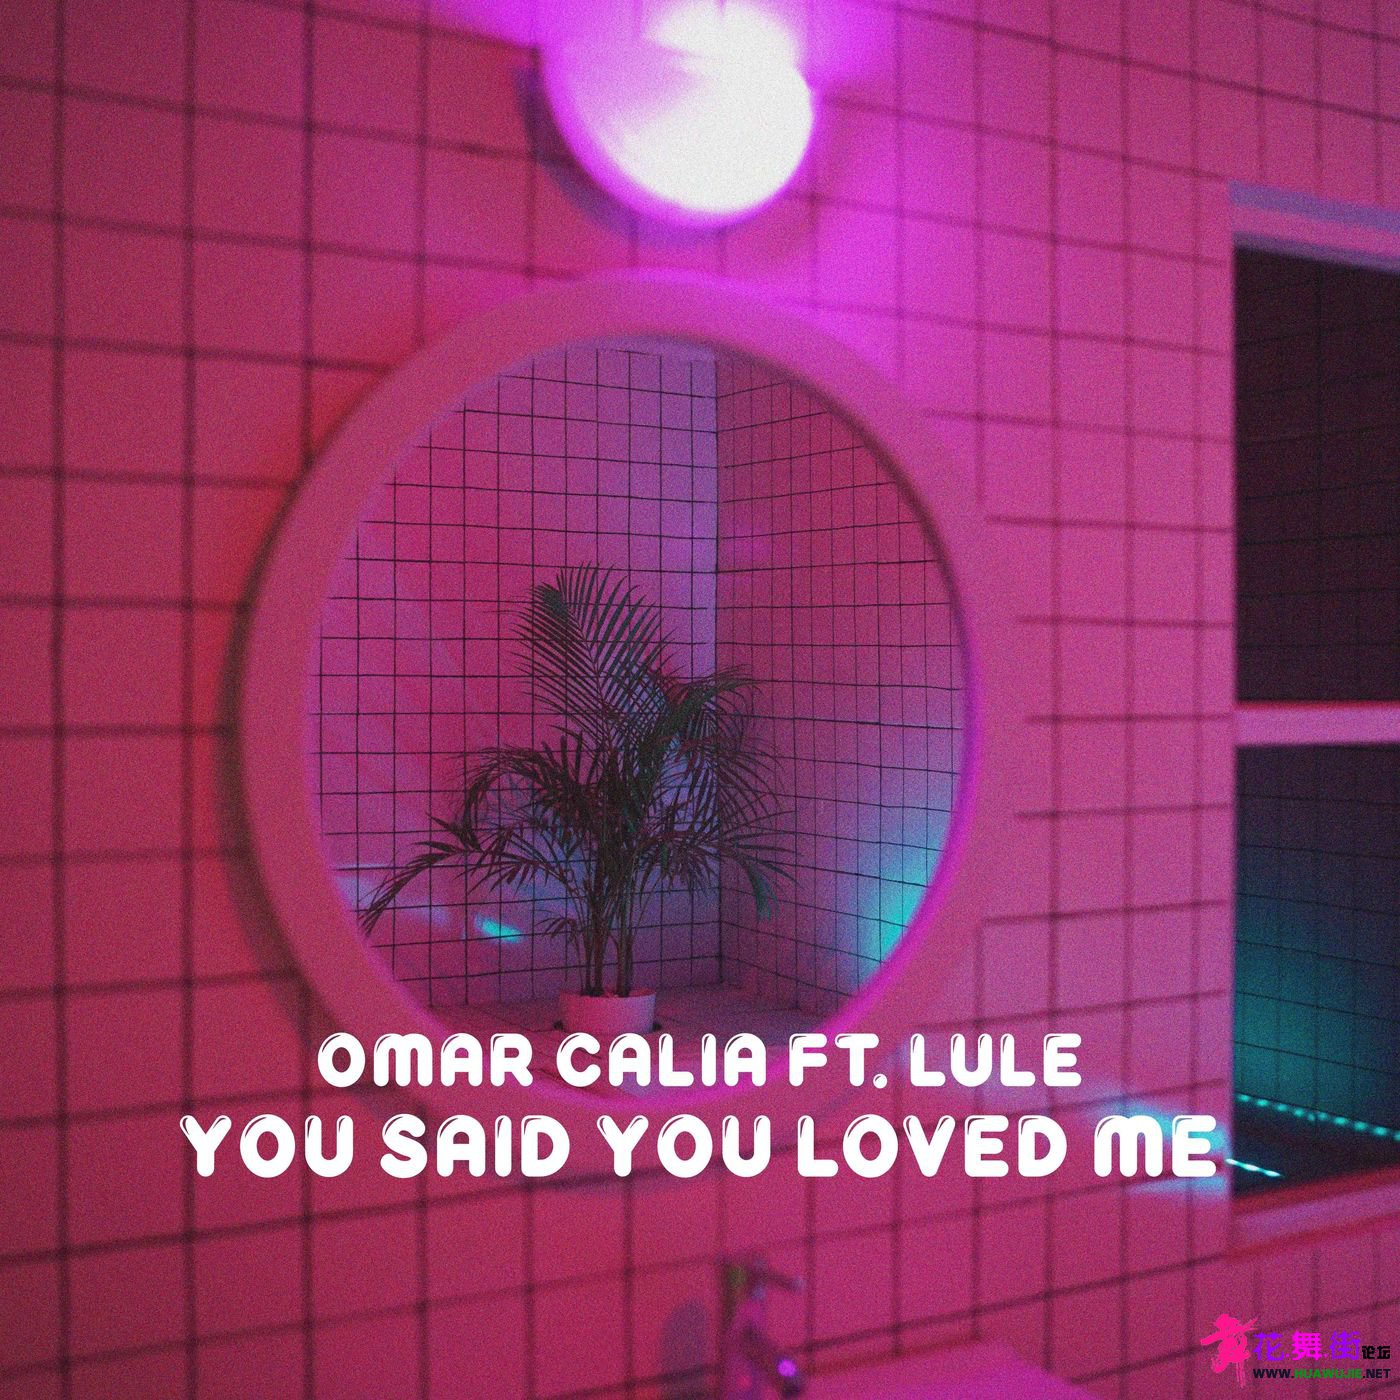 00-omar_calia_ft._lule-you_said_you_loved_me-cover-2021_int.jpg